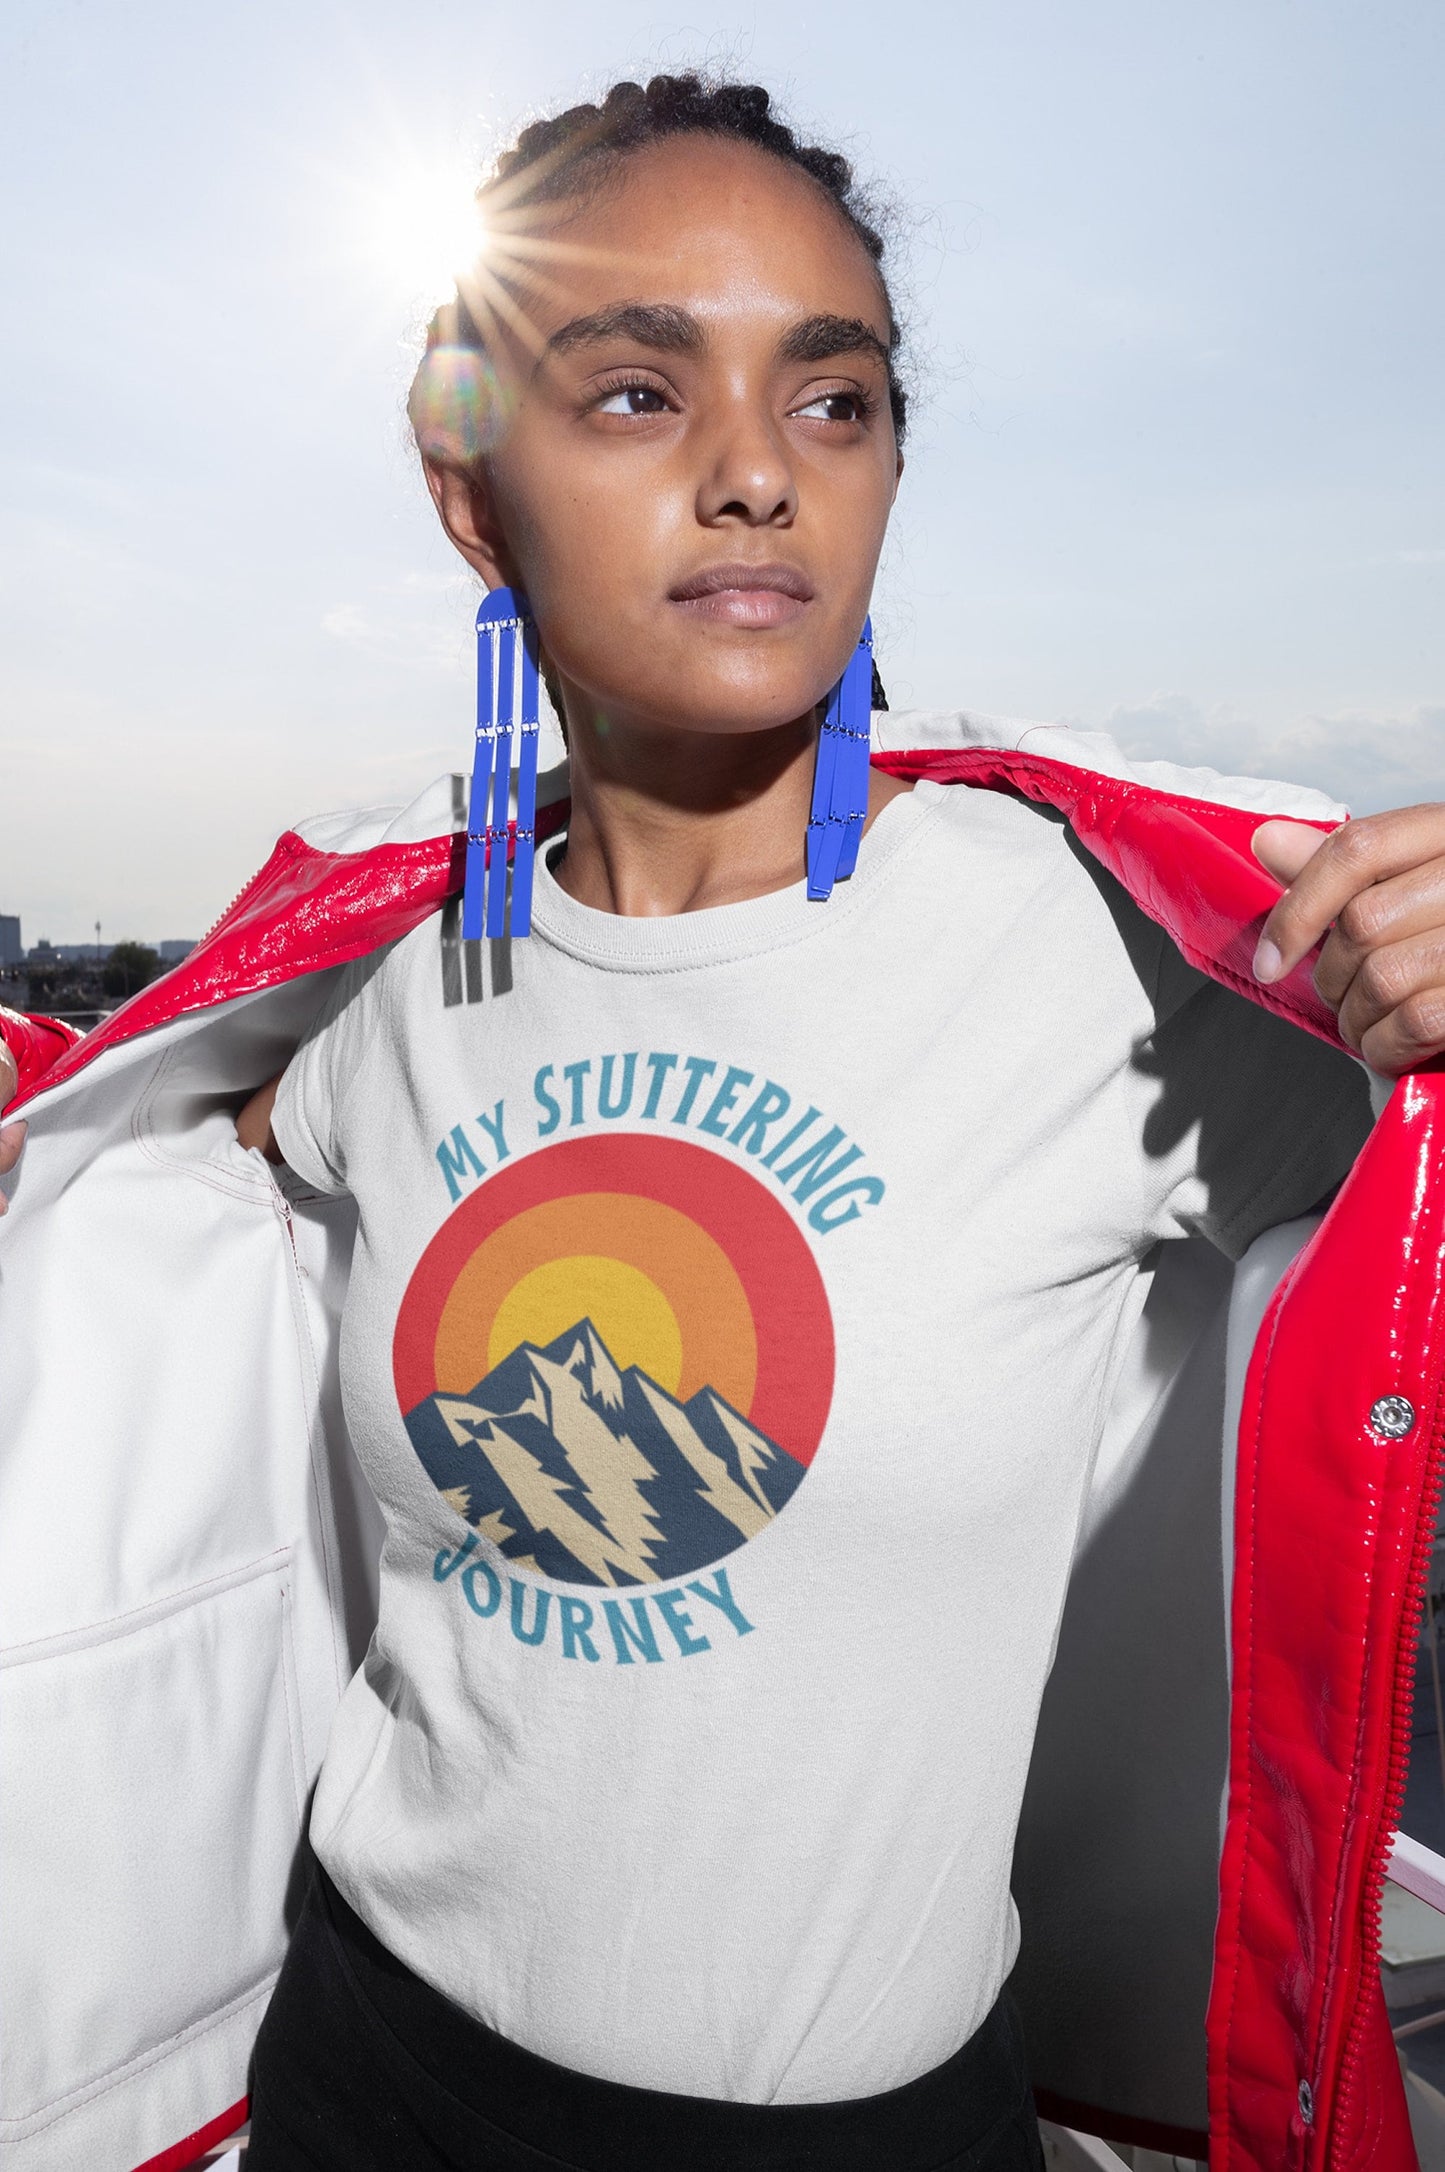 My Stuttering Journey Retro Mountain Unisex T-Shirt